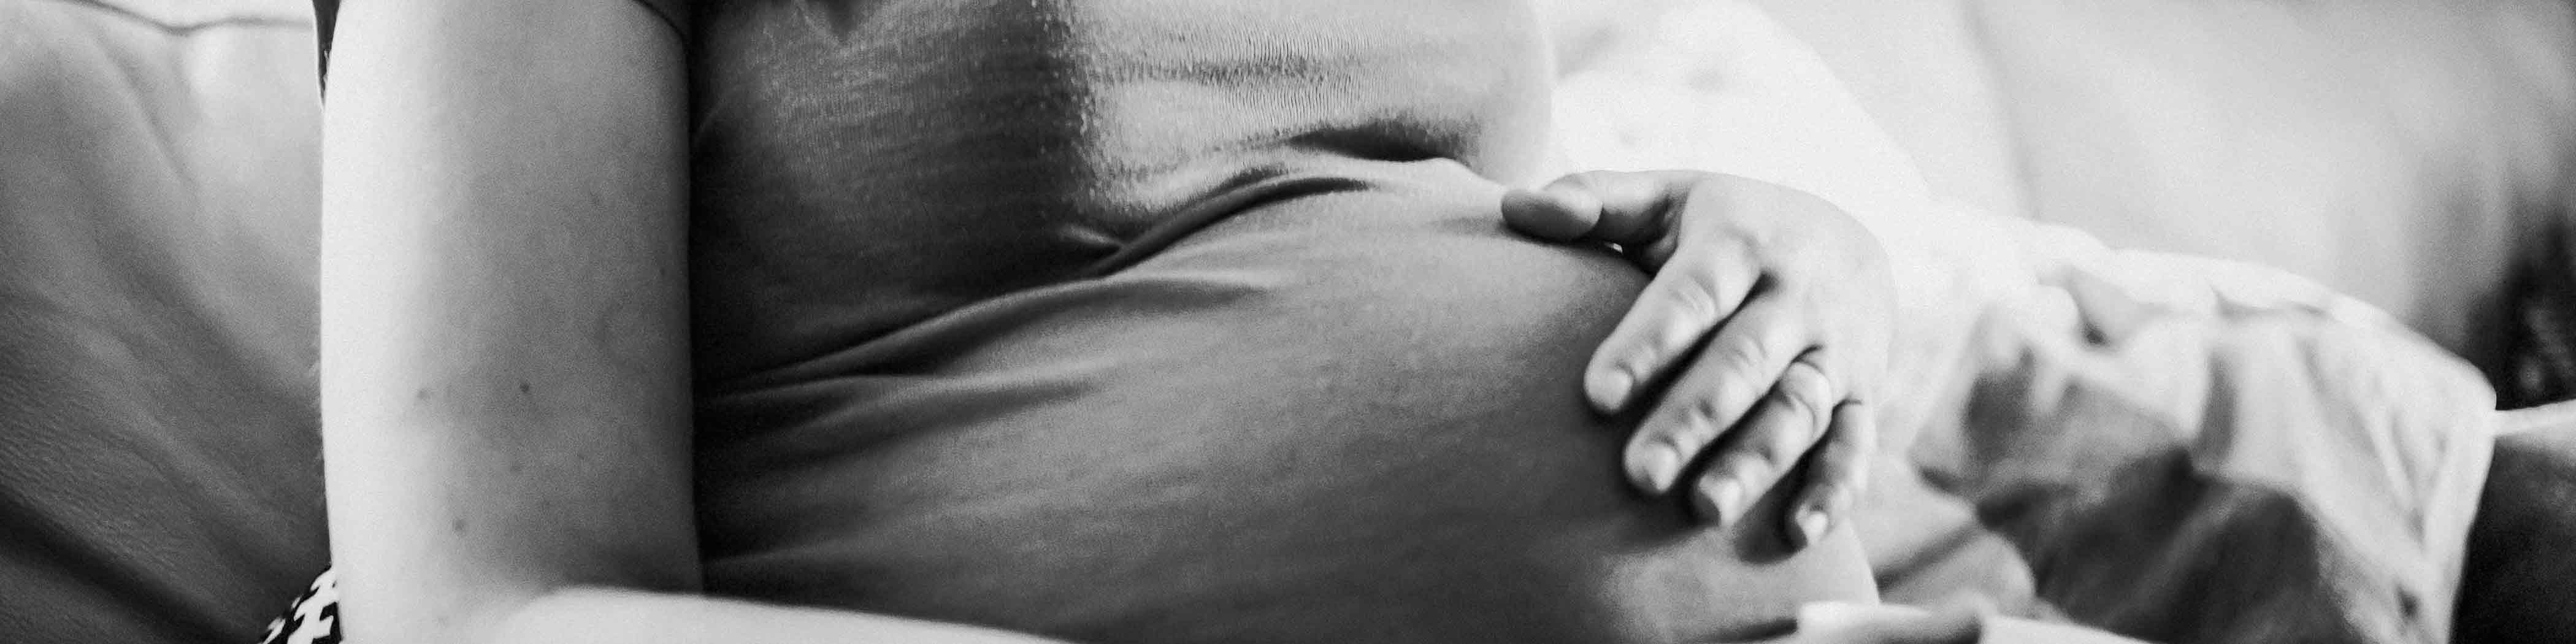 Centering Pregnancy